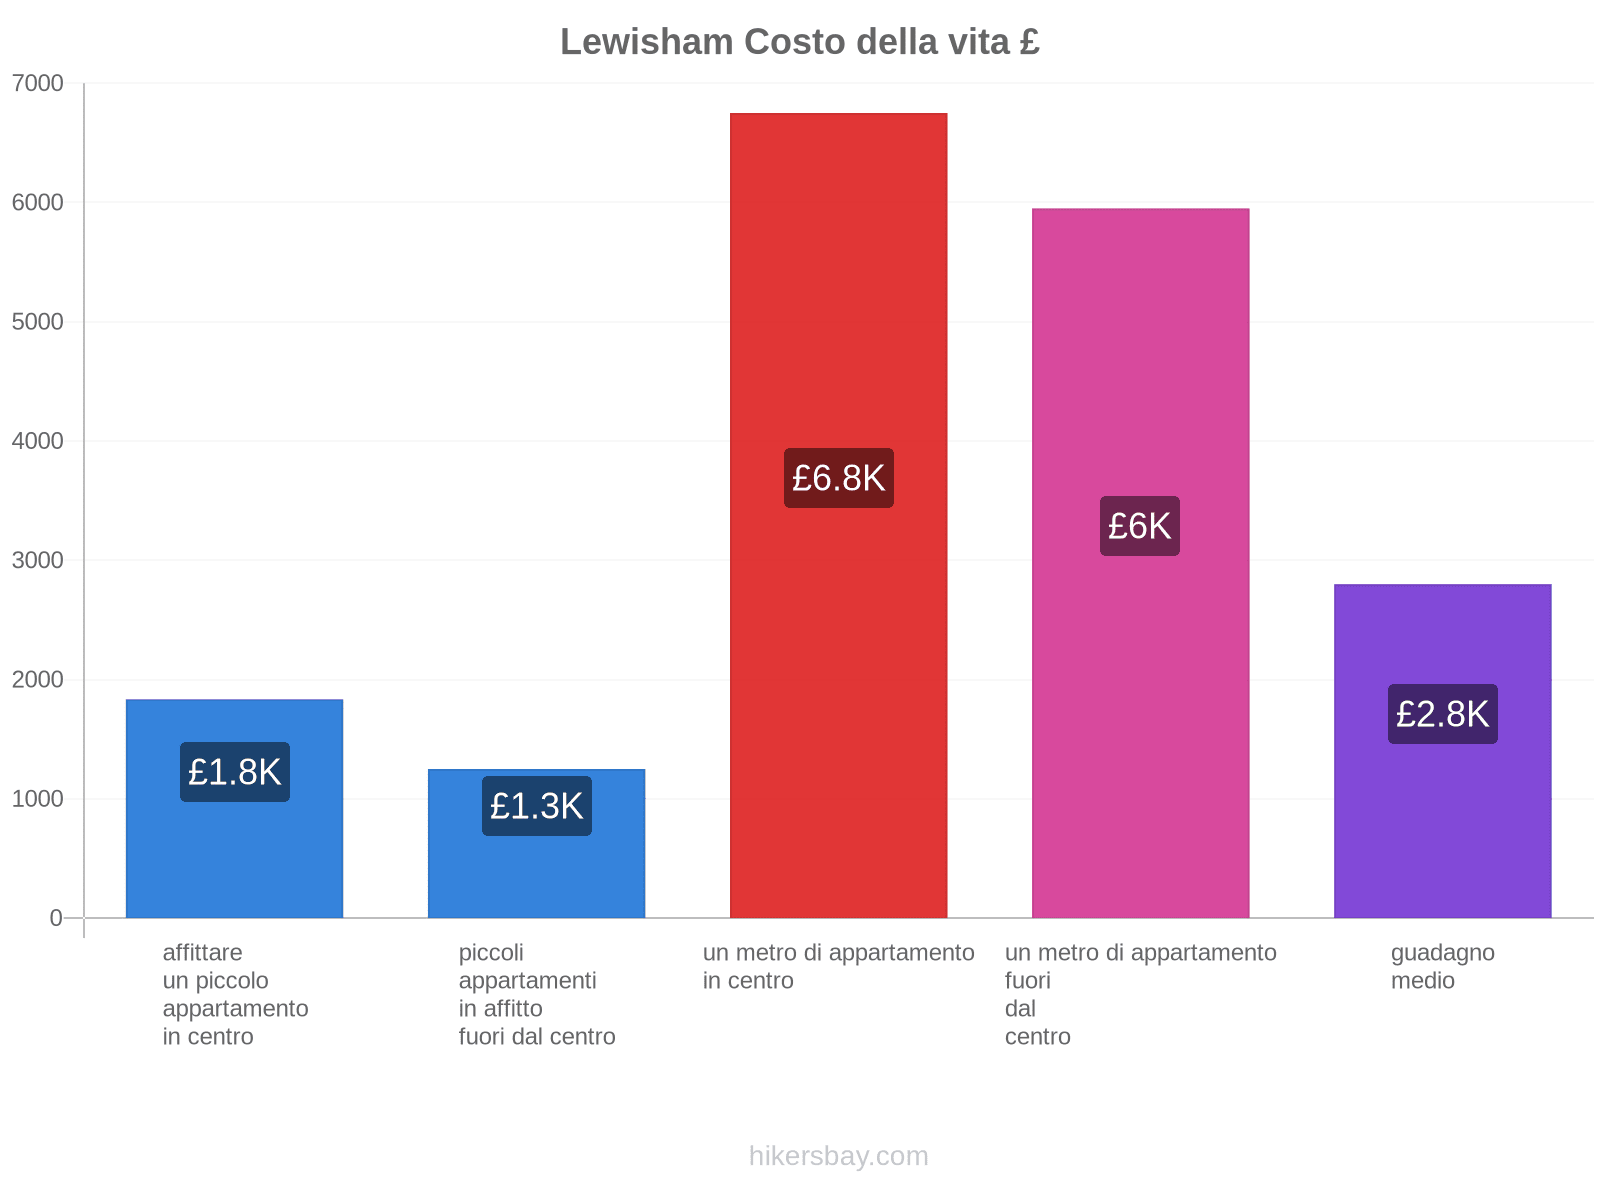 Lewisham costo della vita hikersbay.com